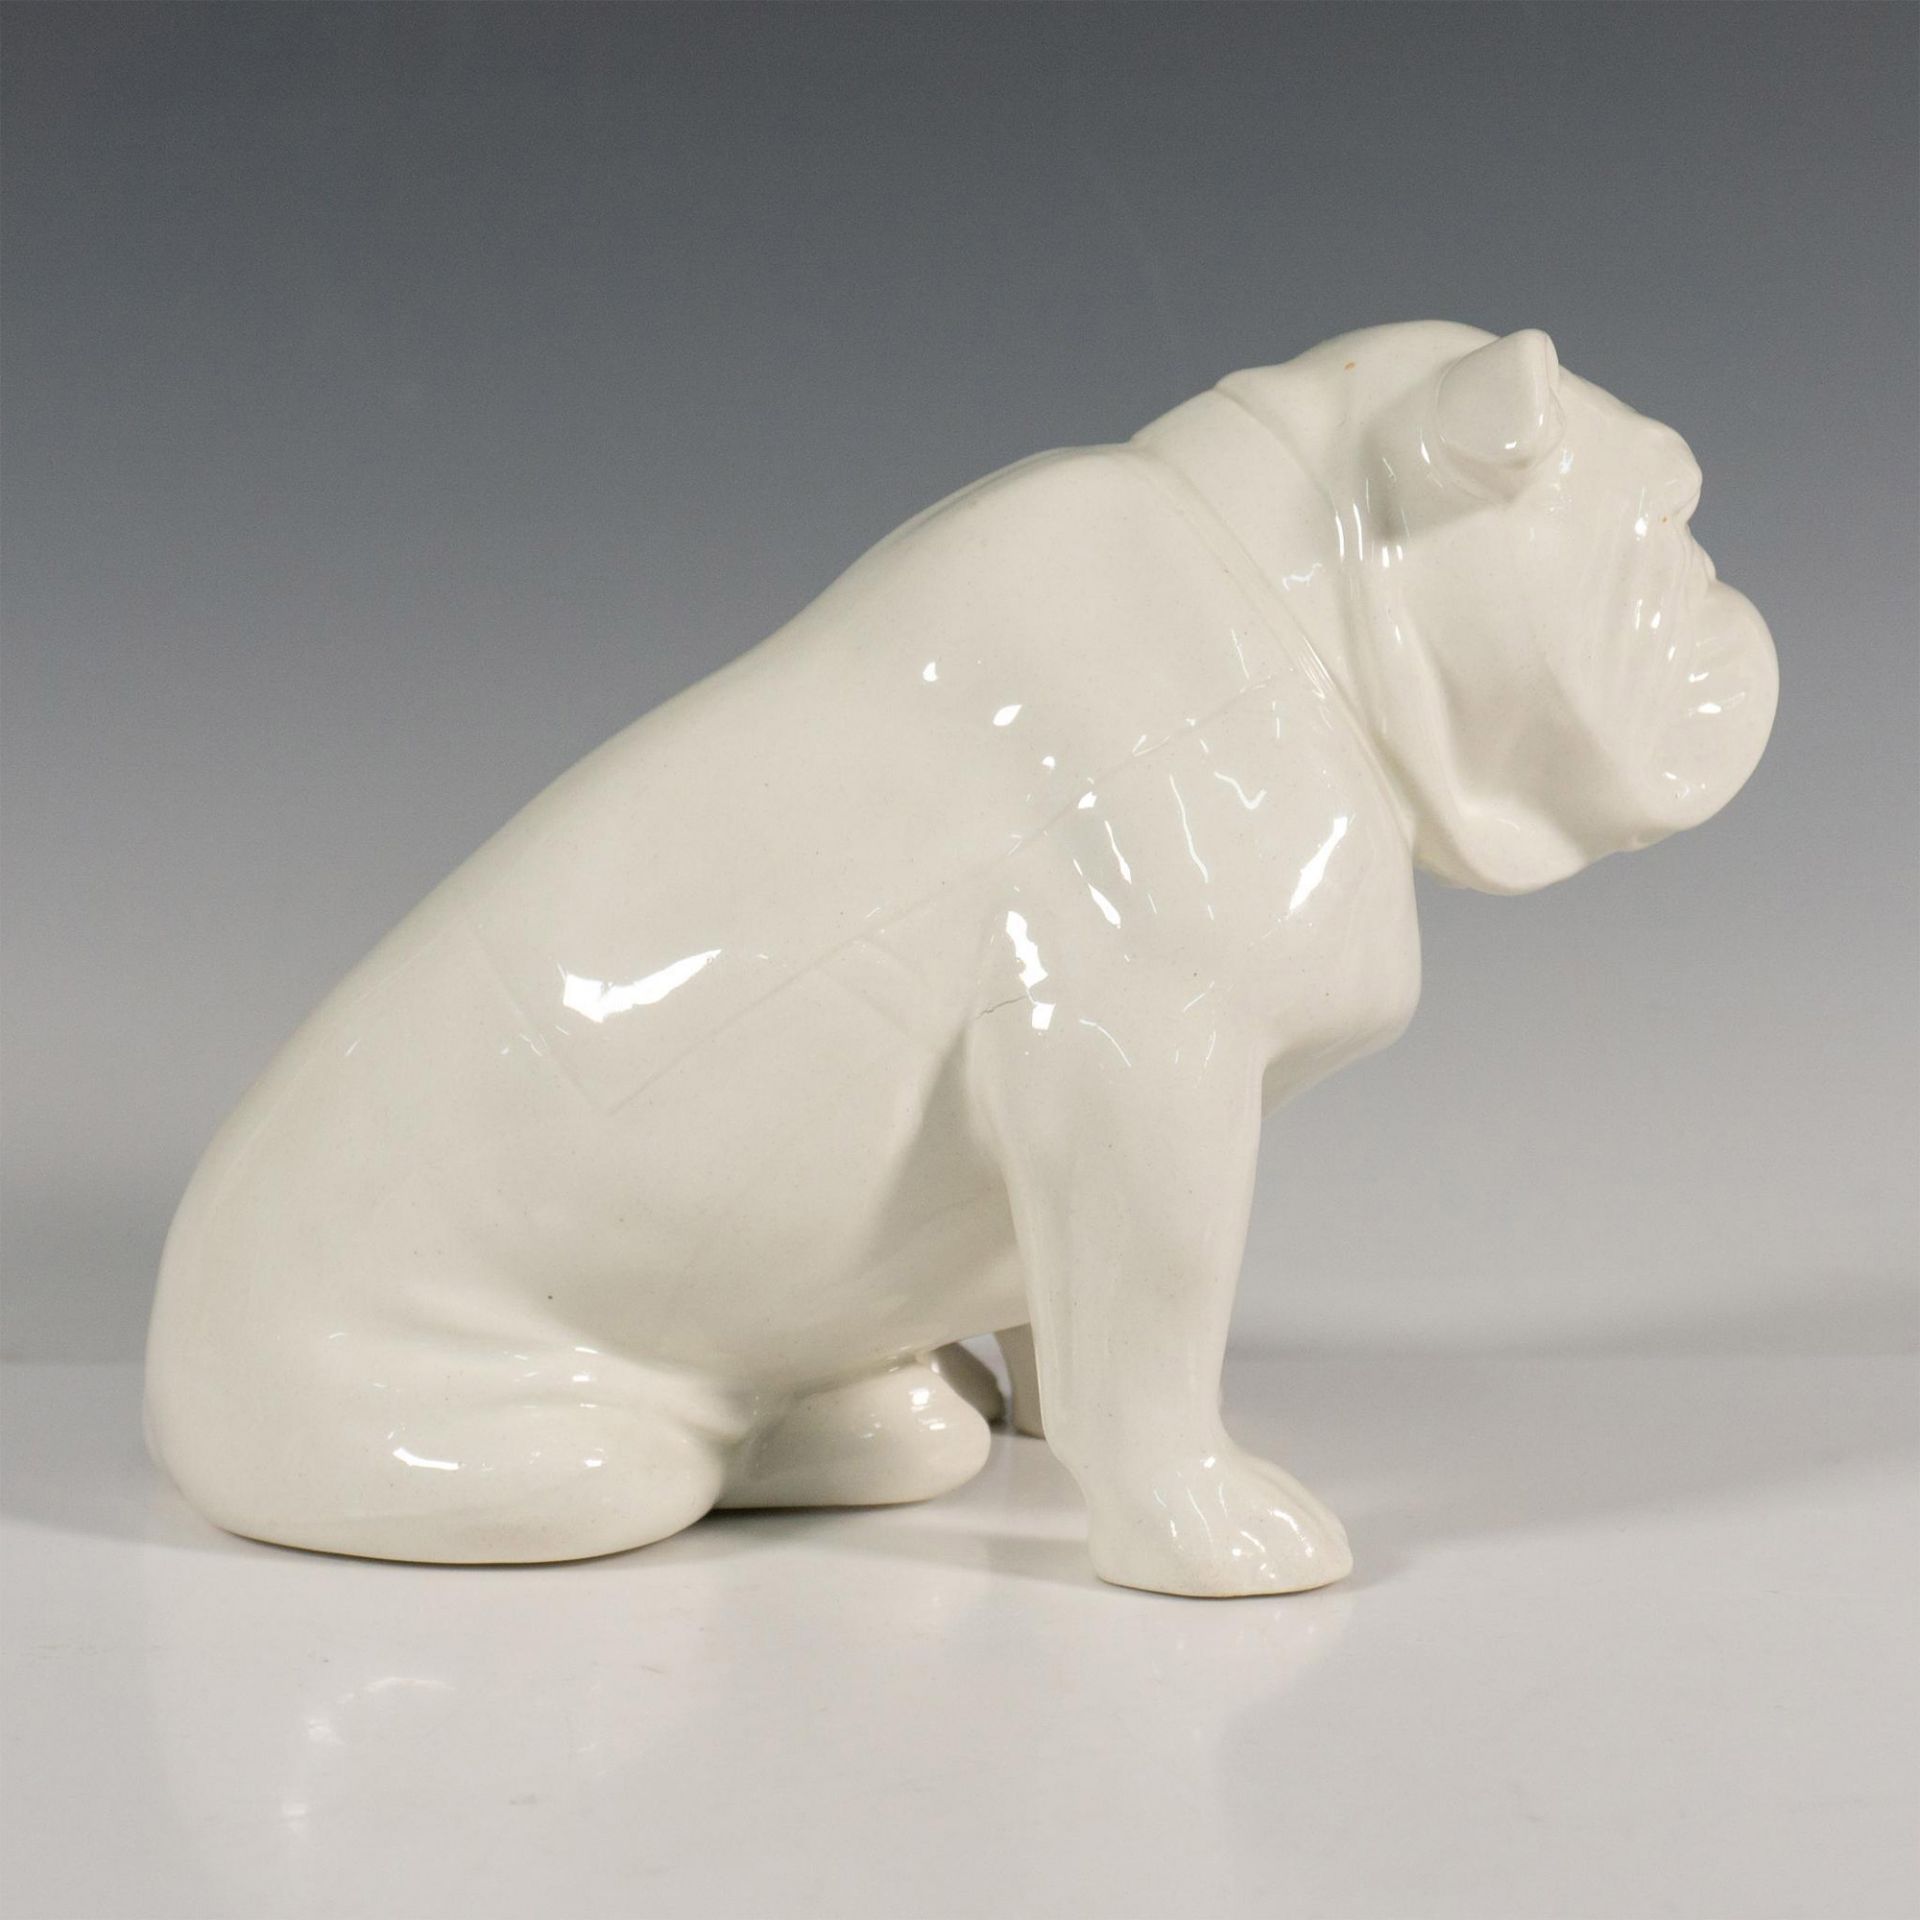 Advertising Bulldog - Royal Doulton Prototype Figurine - Image 4 of 5